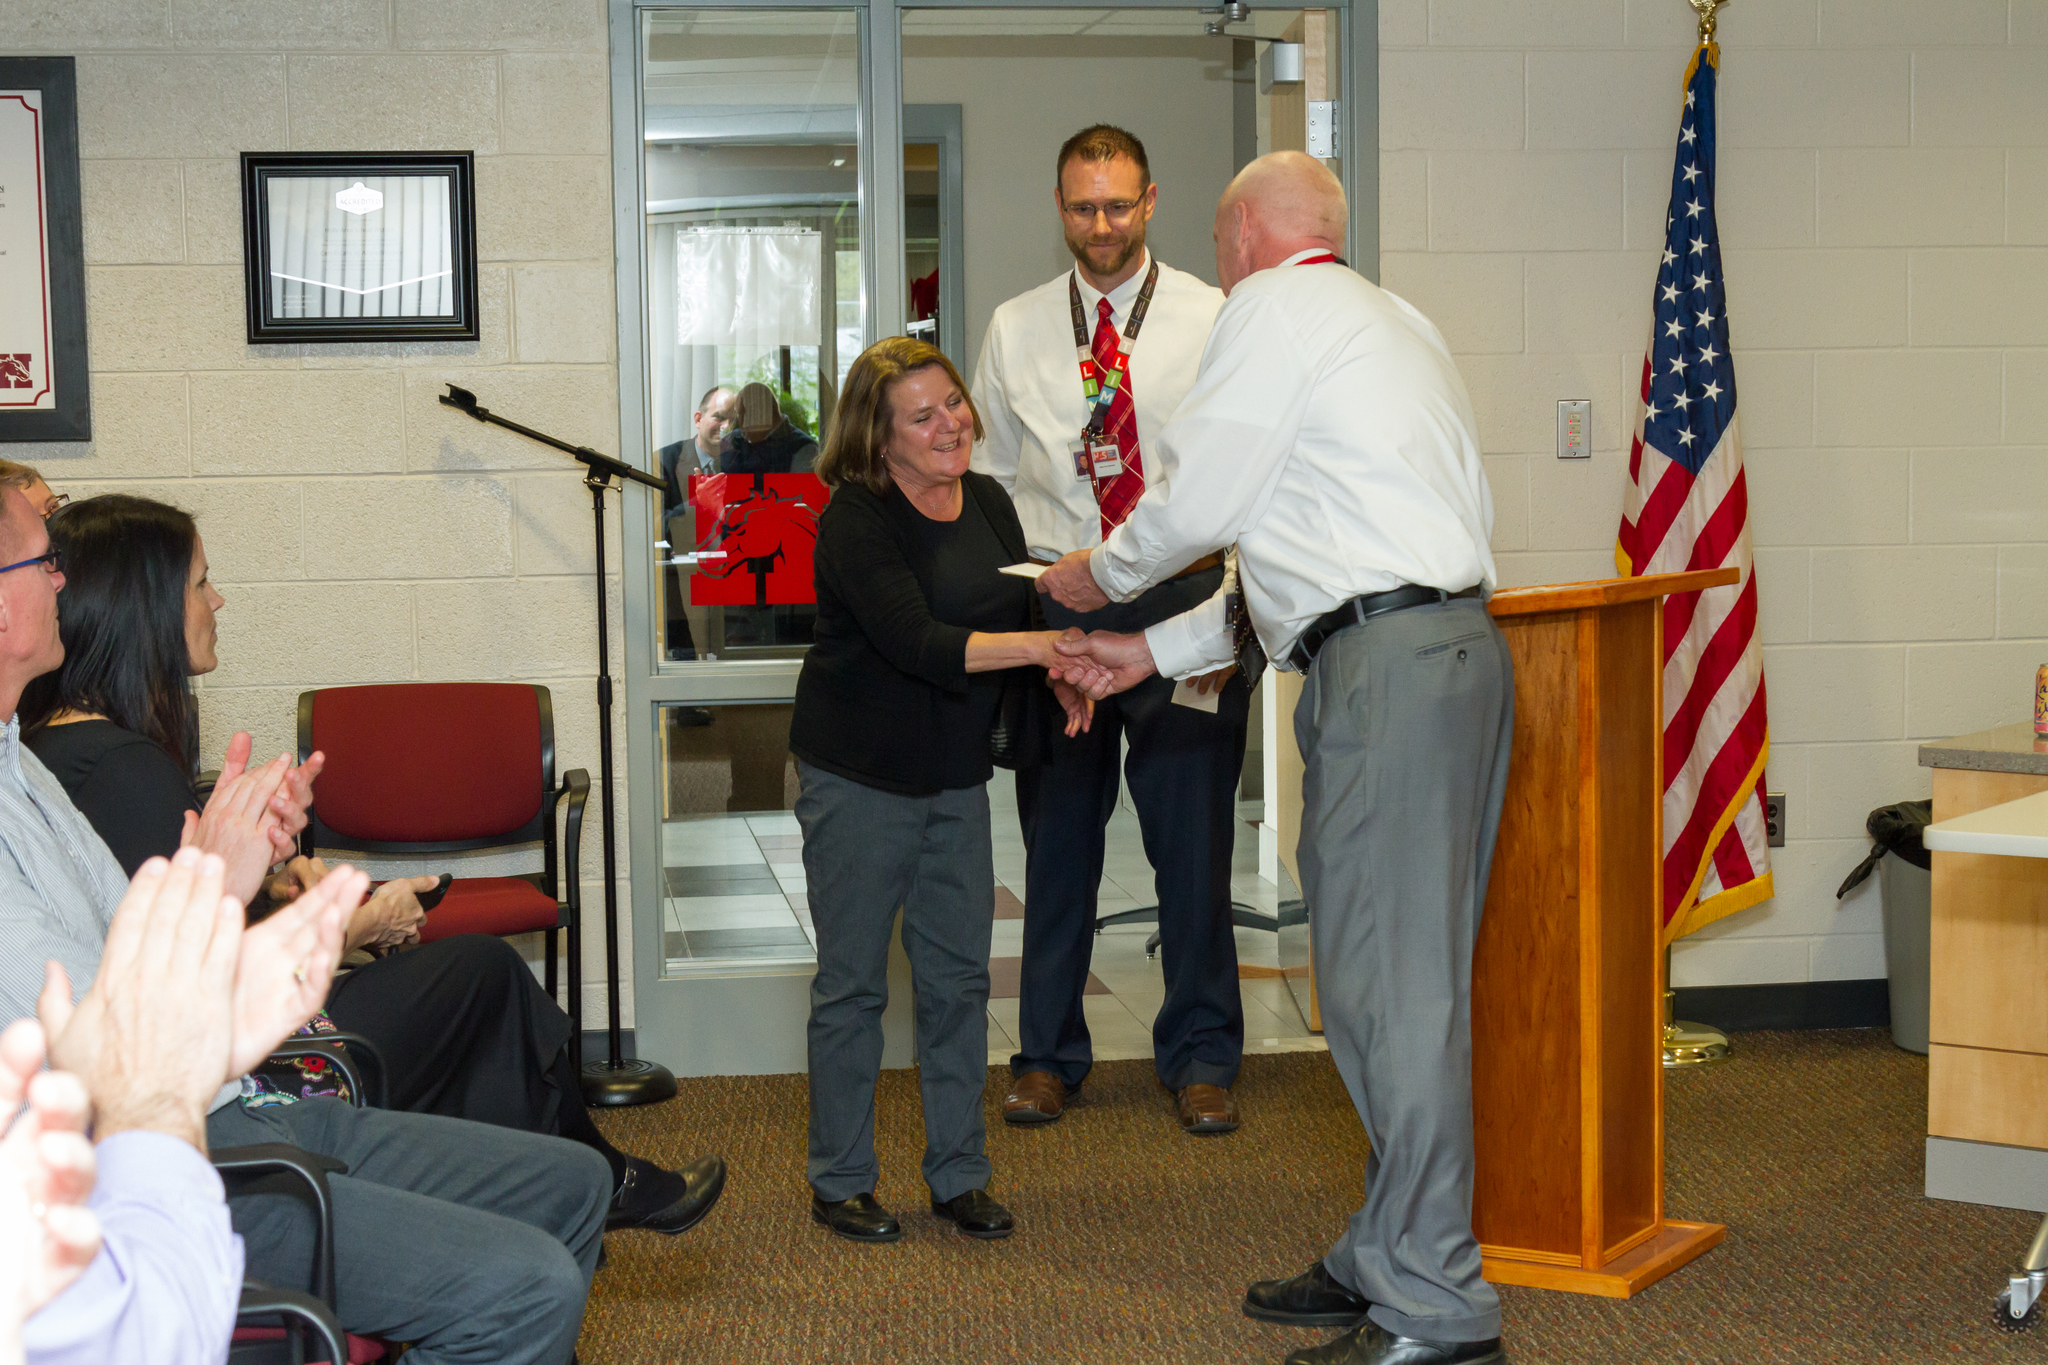 Mrs. Keener receiving her award from Mr. Nuss